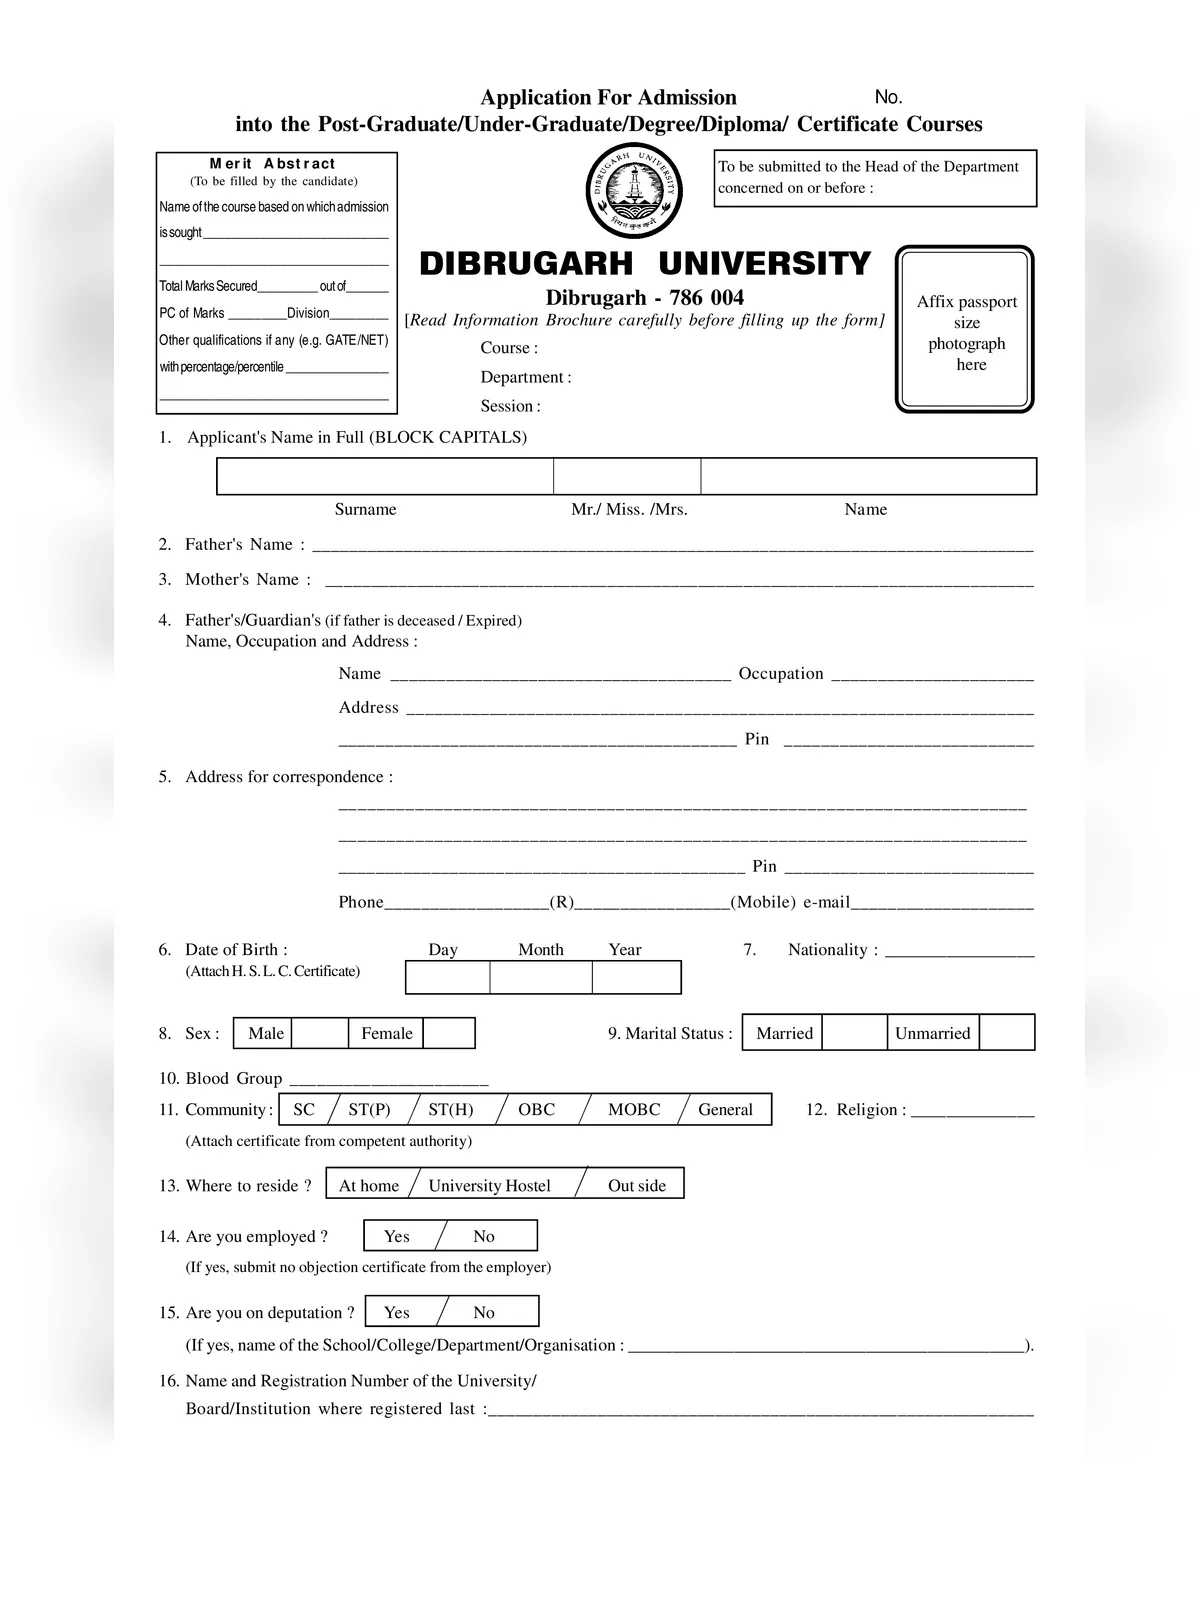 Dibrugarh University Admission Form